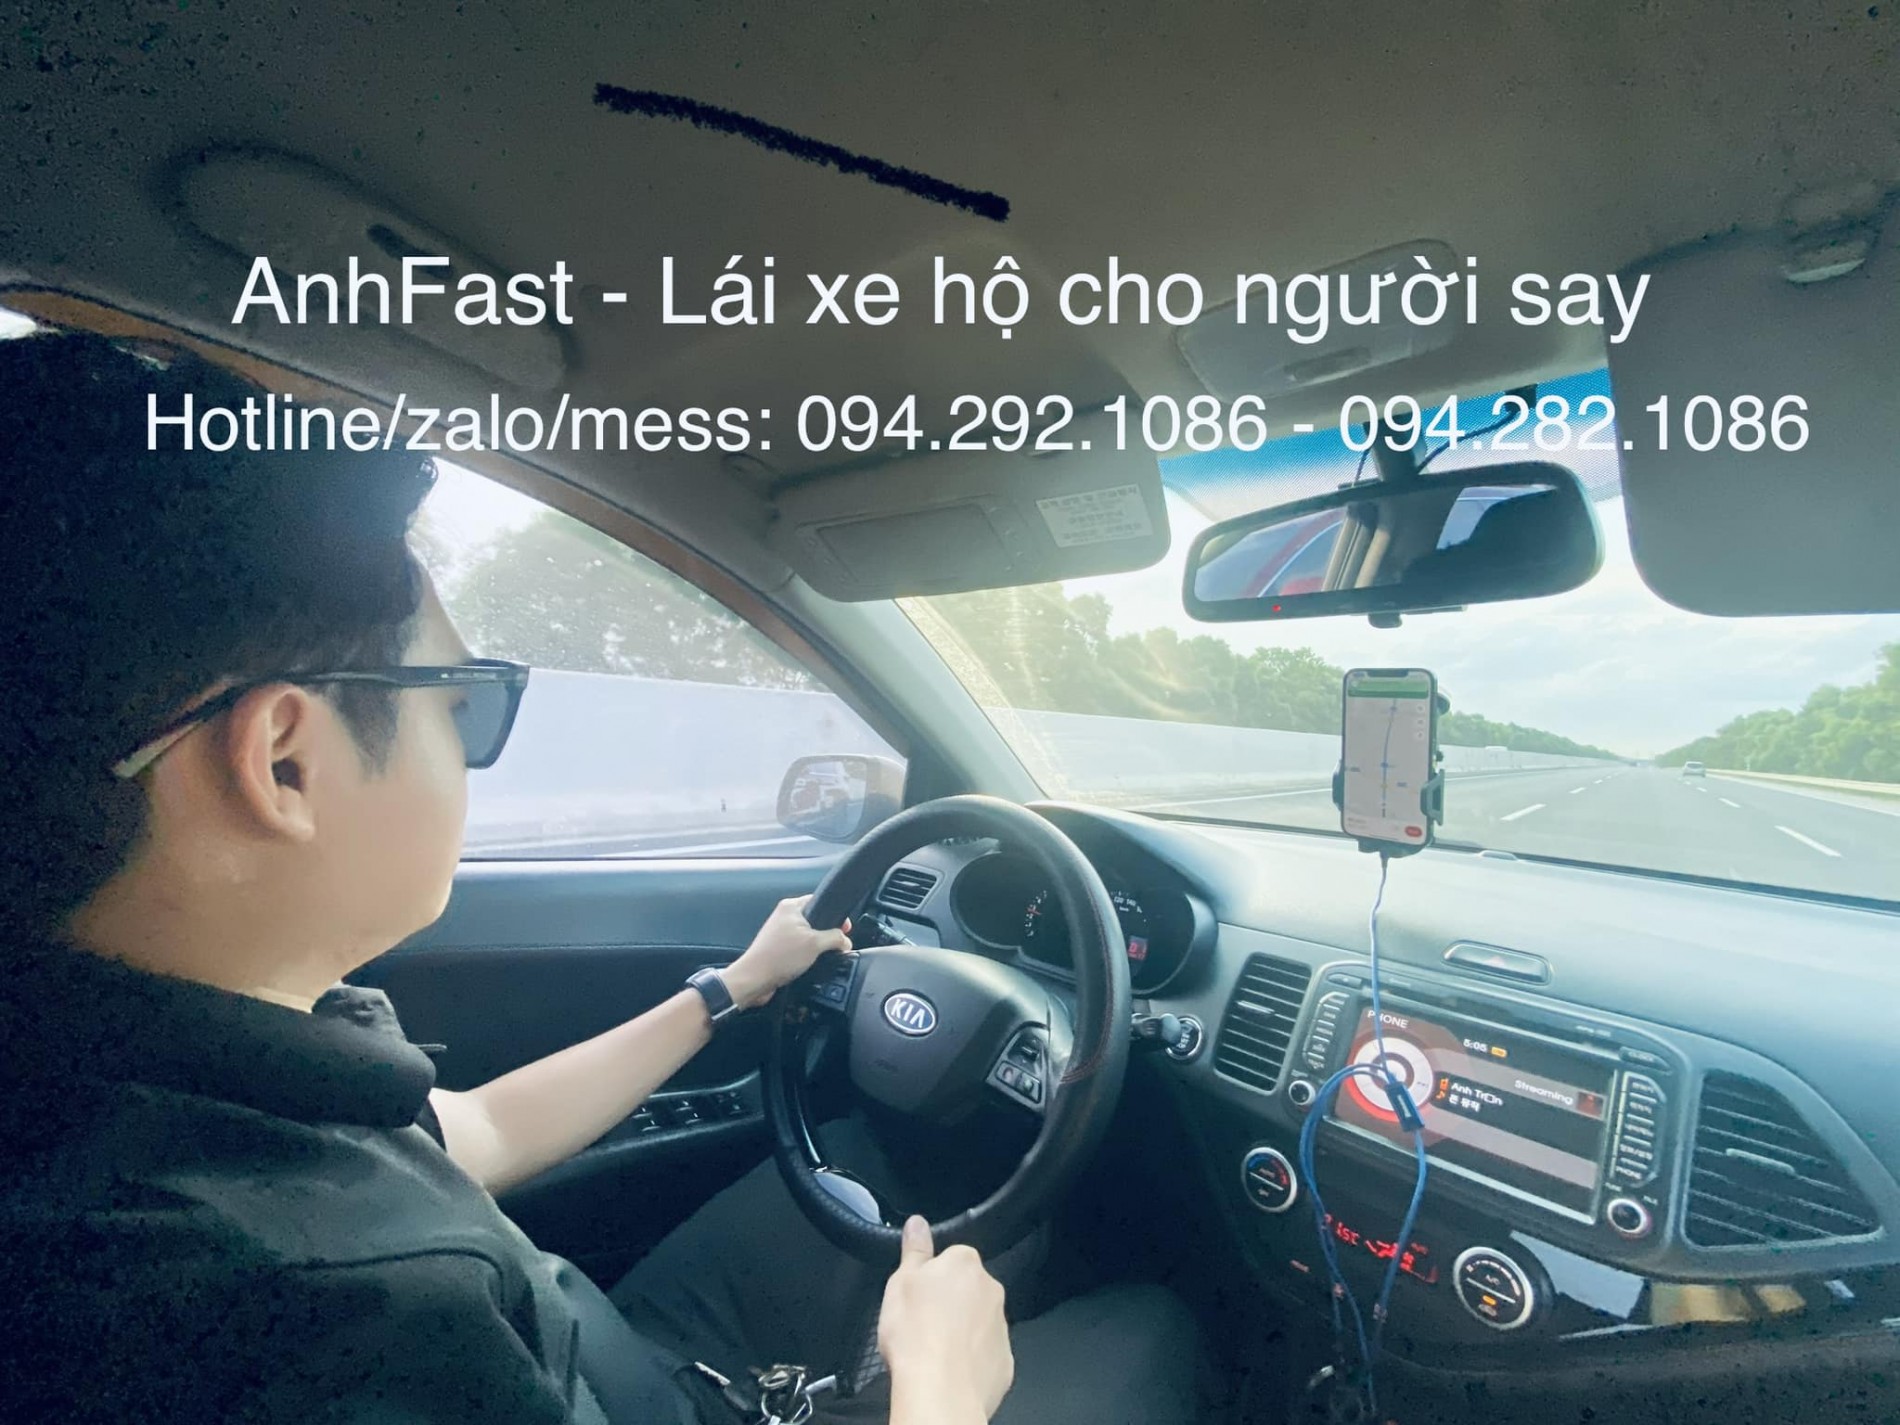 anhfast_-_lai_xe_o_to_ho_cho_nguoi_say_tai_ha_noi